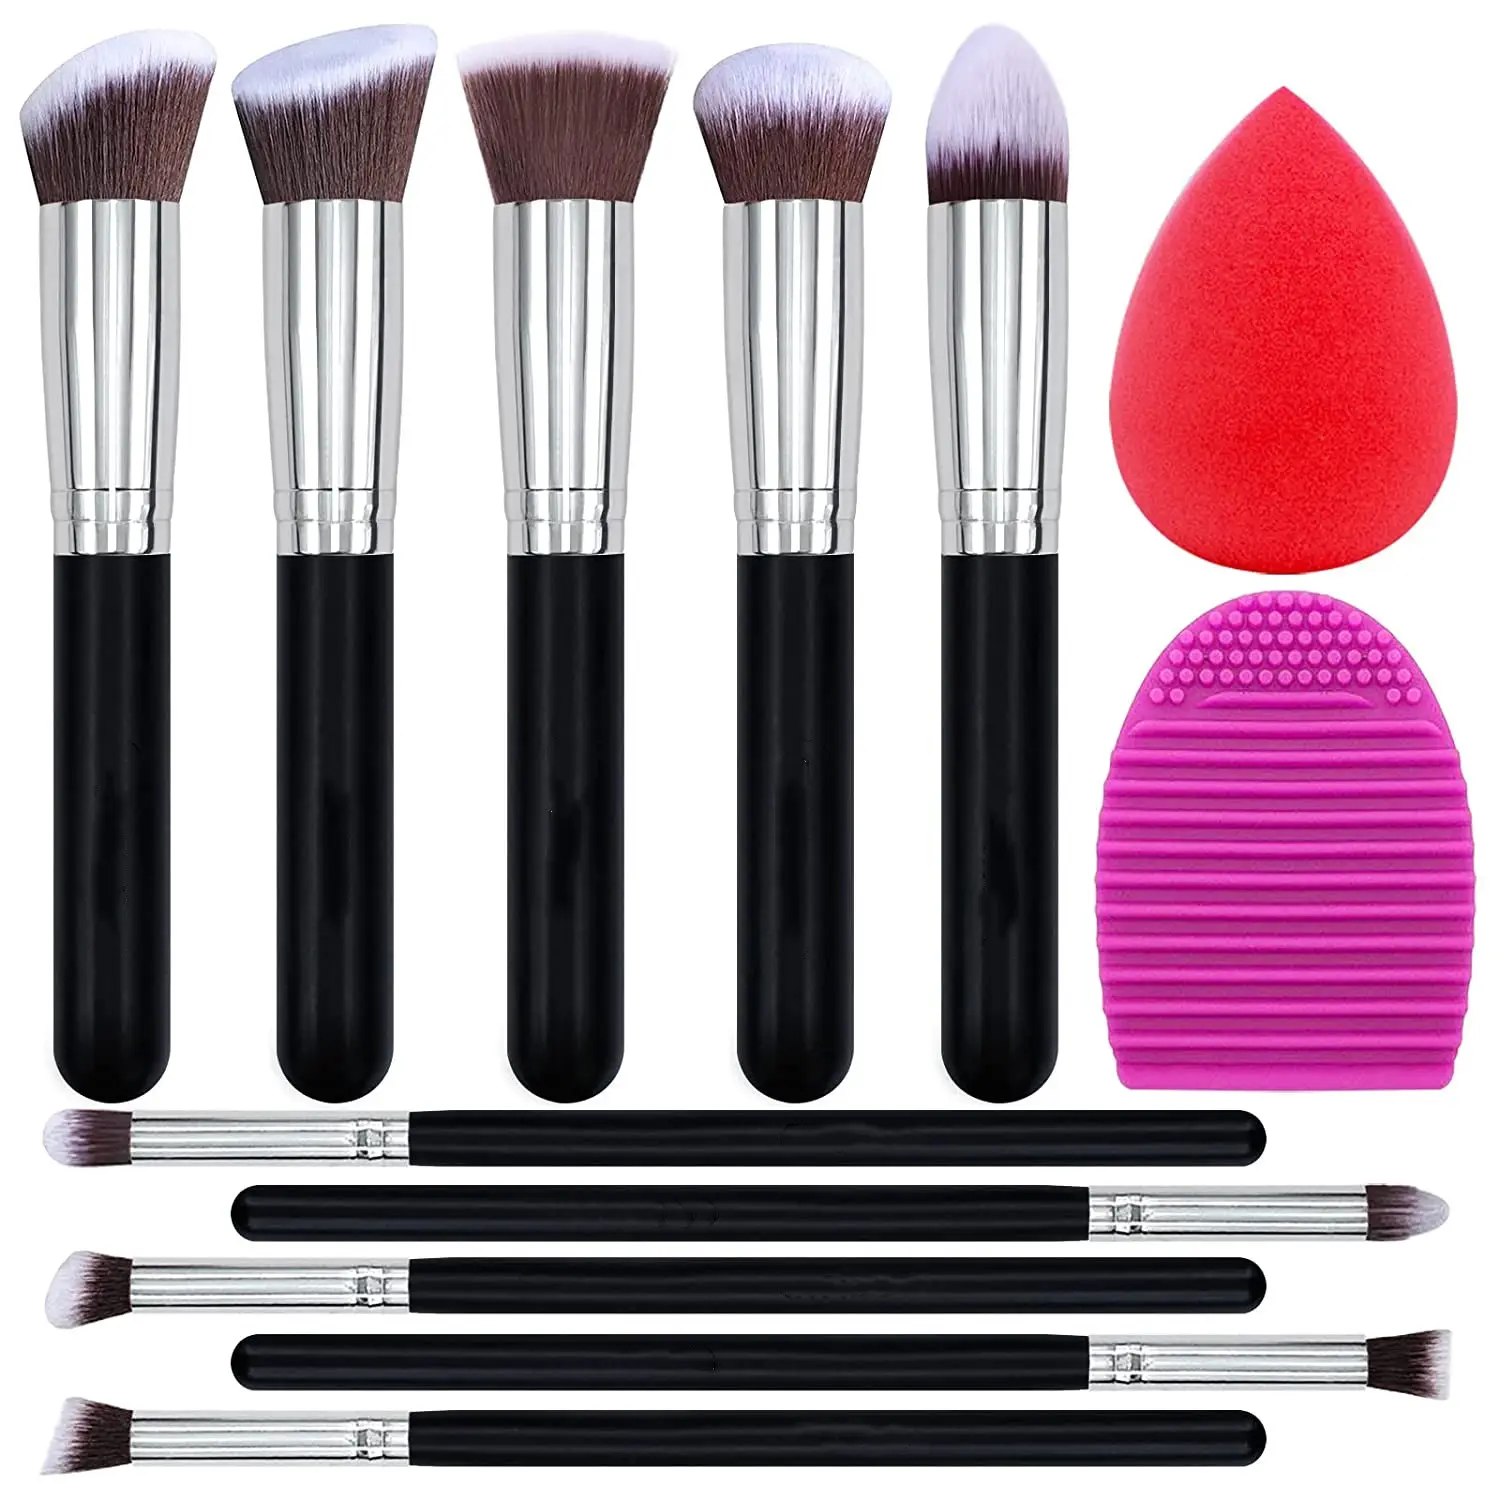 Wholesale Synthetic Hair Makeup Brushes Kabuki Brush Kit with Makeup Sponge and Brush Cleaner